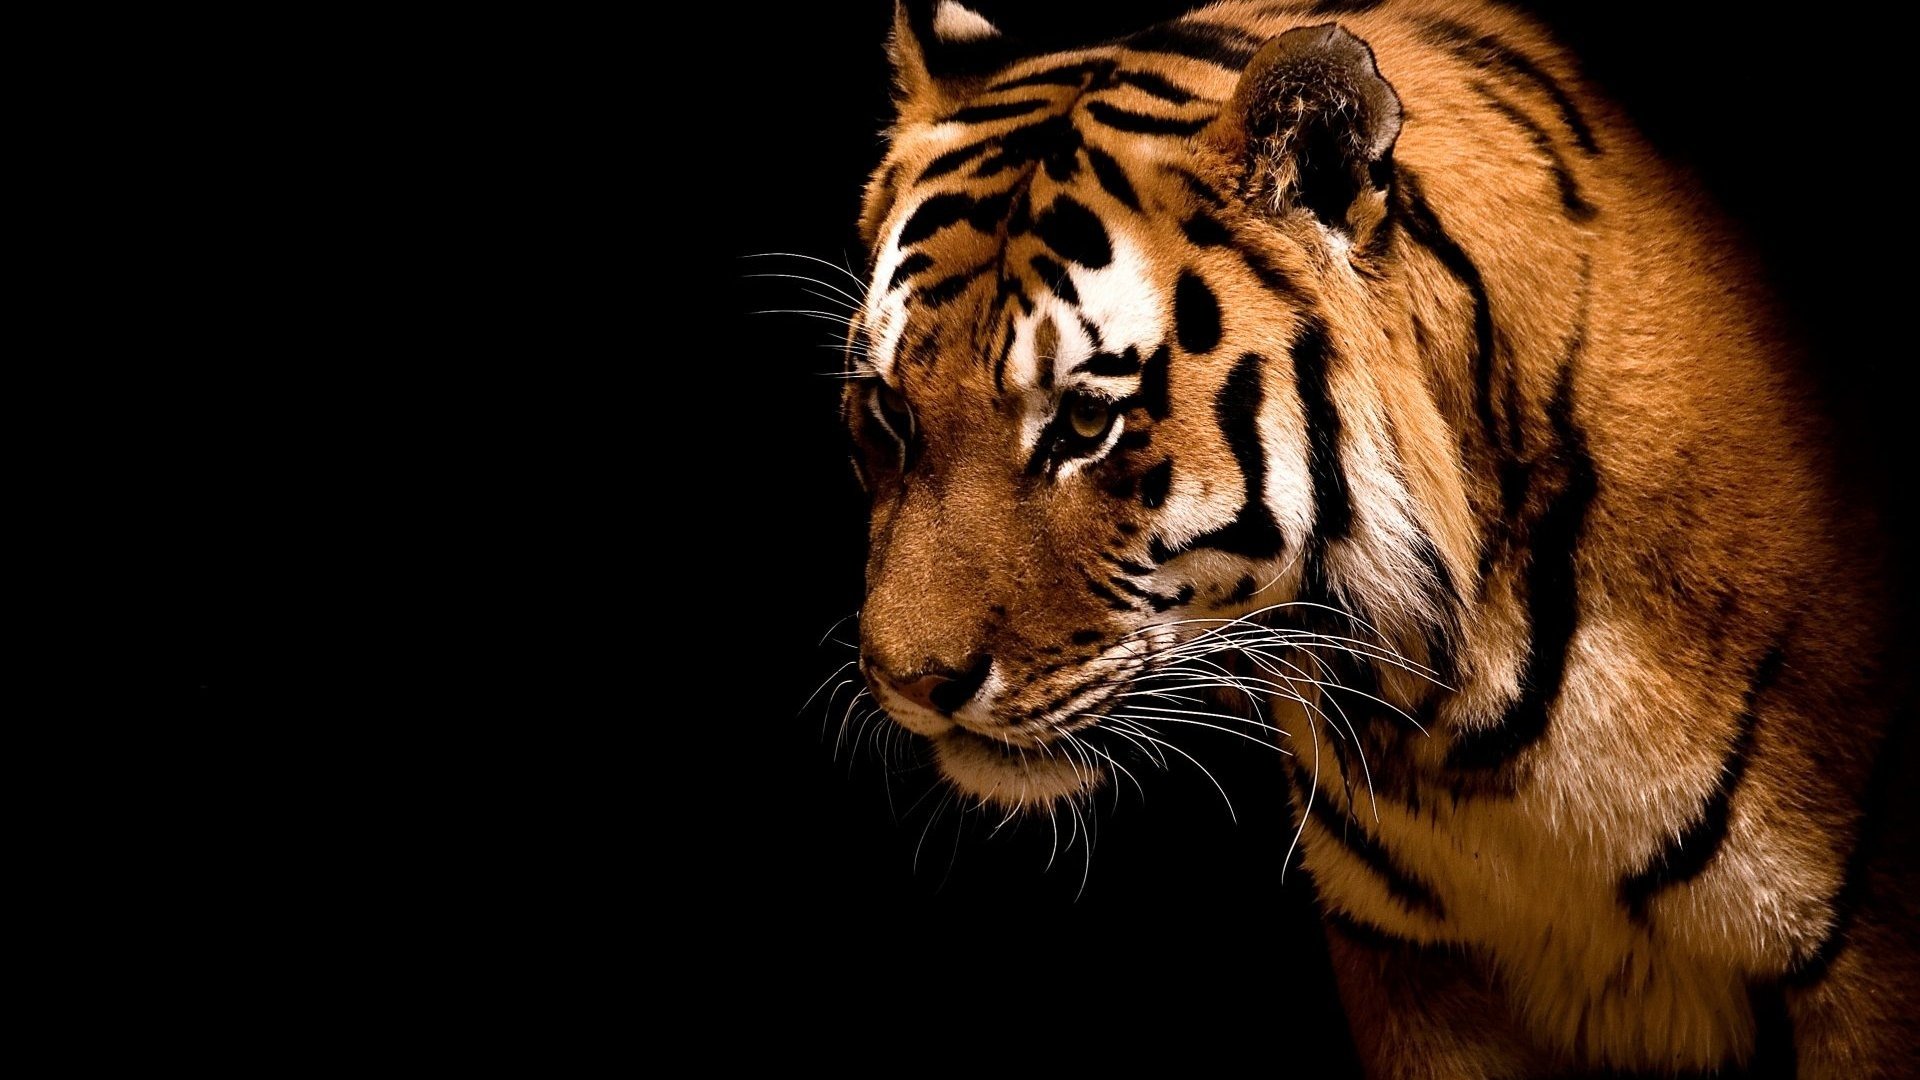 Tiger Wallpaper In HD Sf